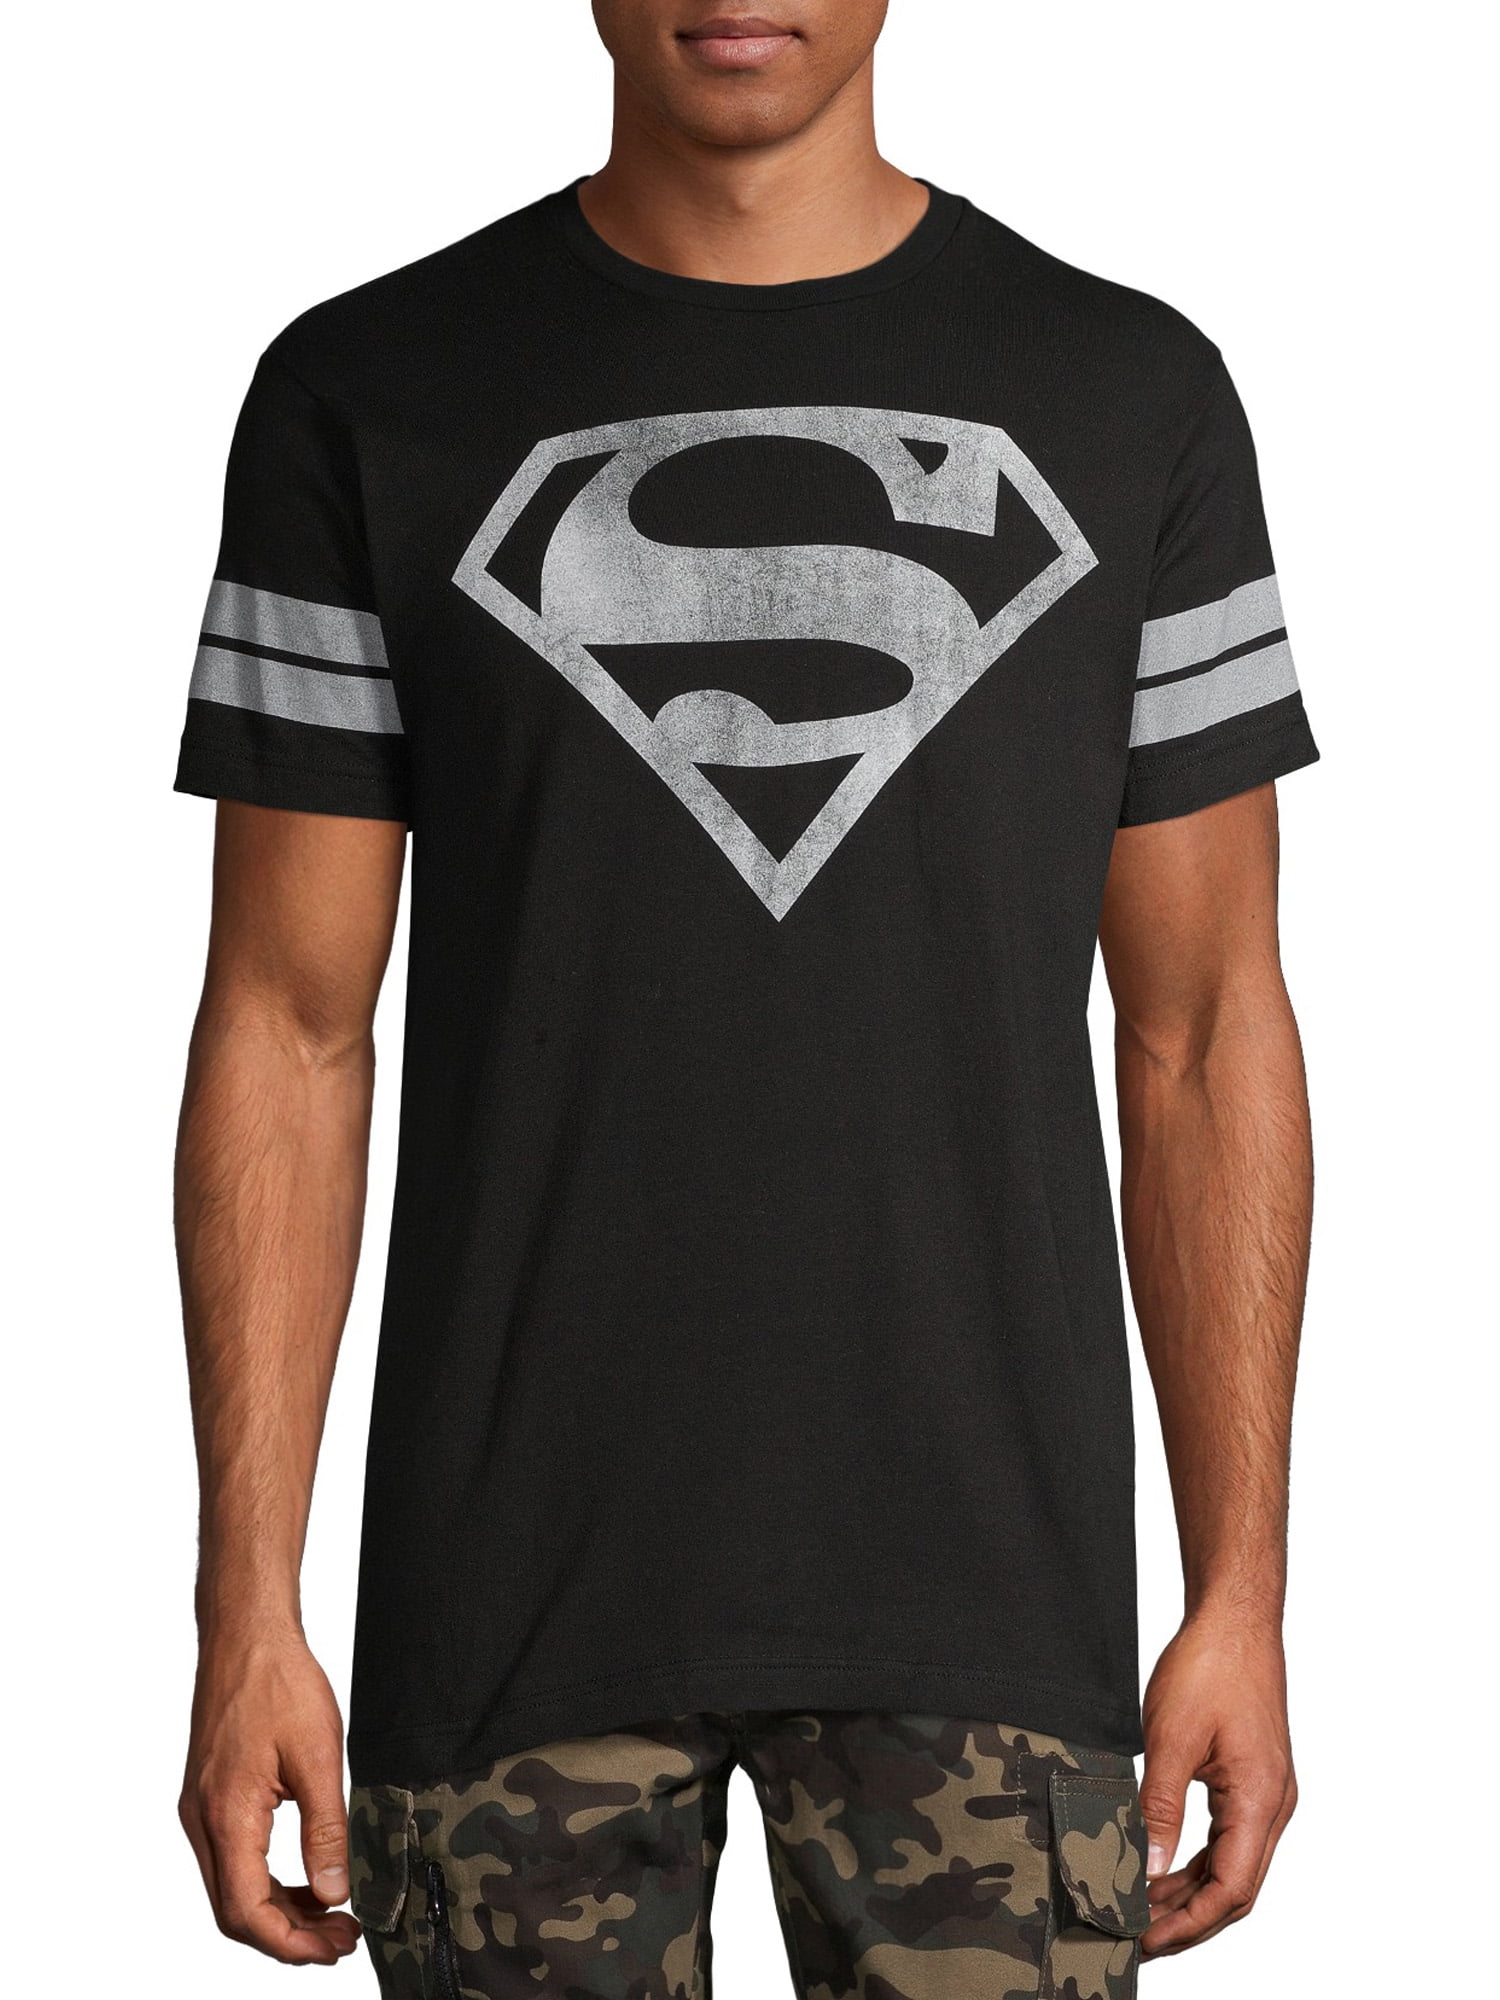 Superman White Logo T Shirt Licensed Comic Book Movie Tee Black